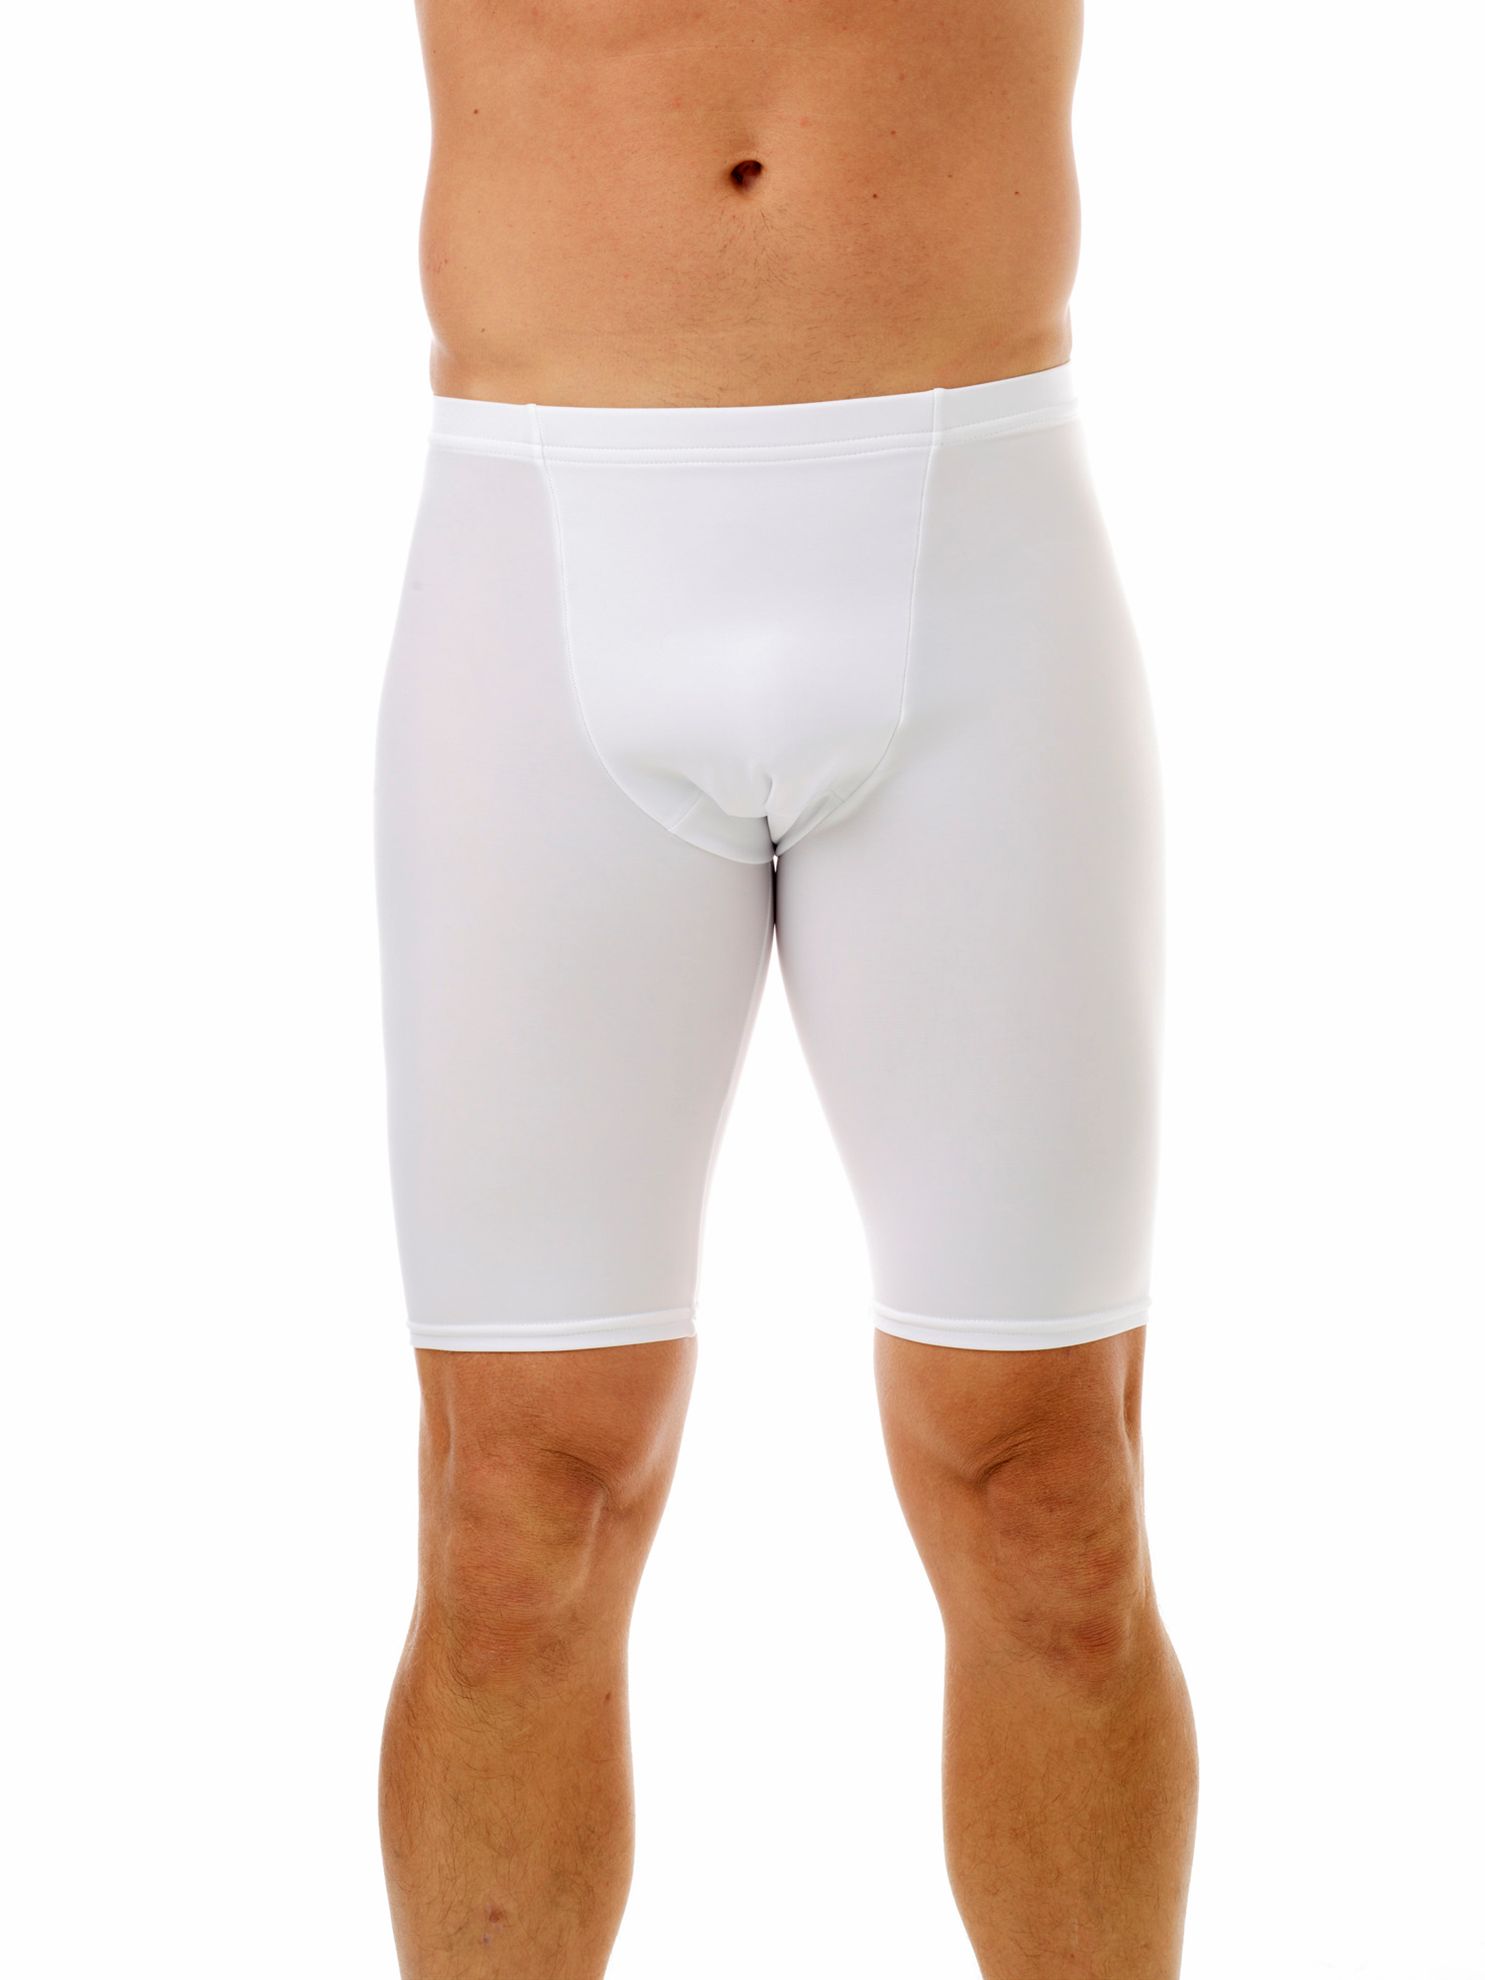 Underworks Mens Microfiber Compression Shorts - White - XS